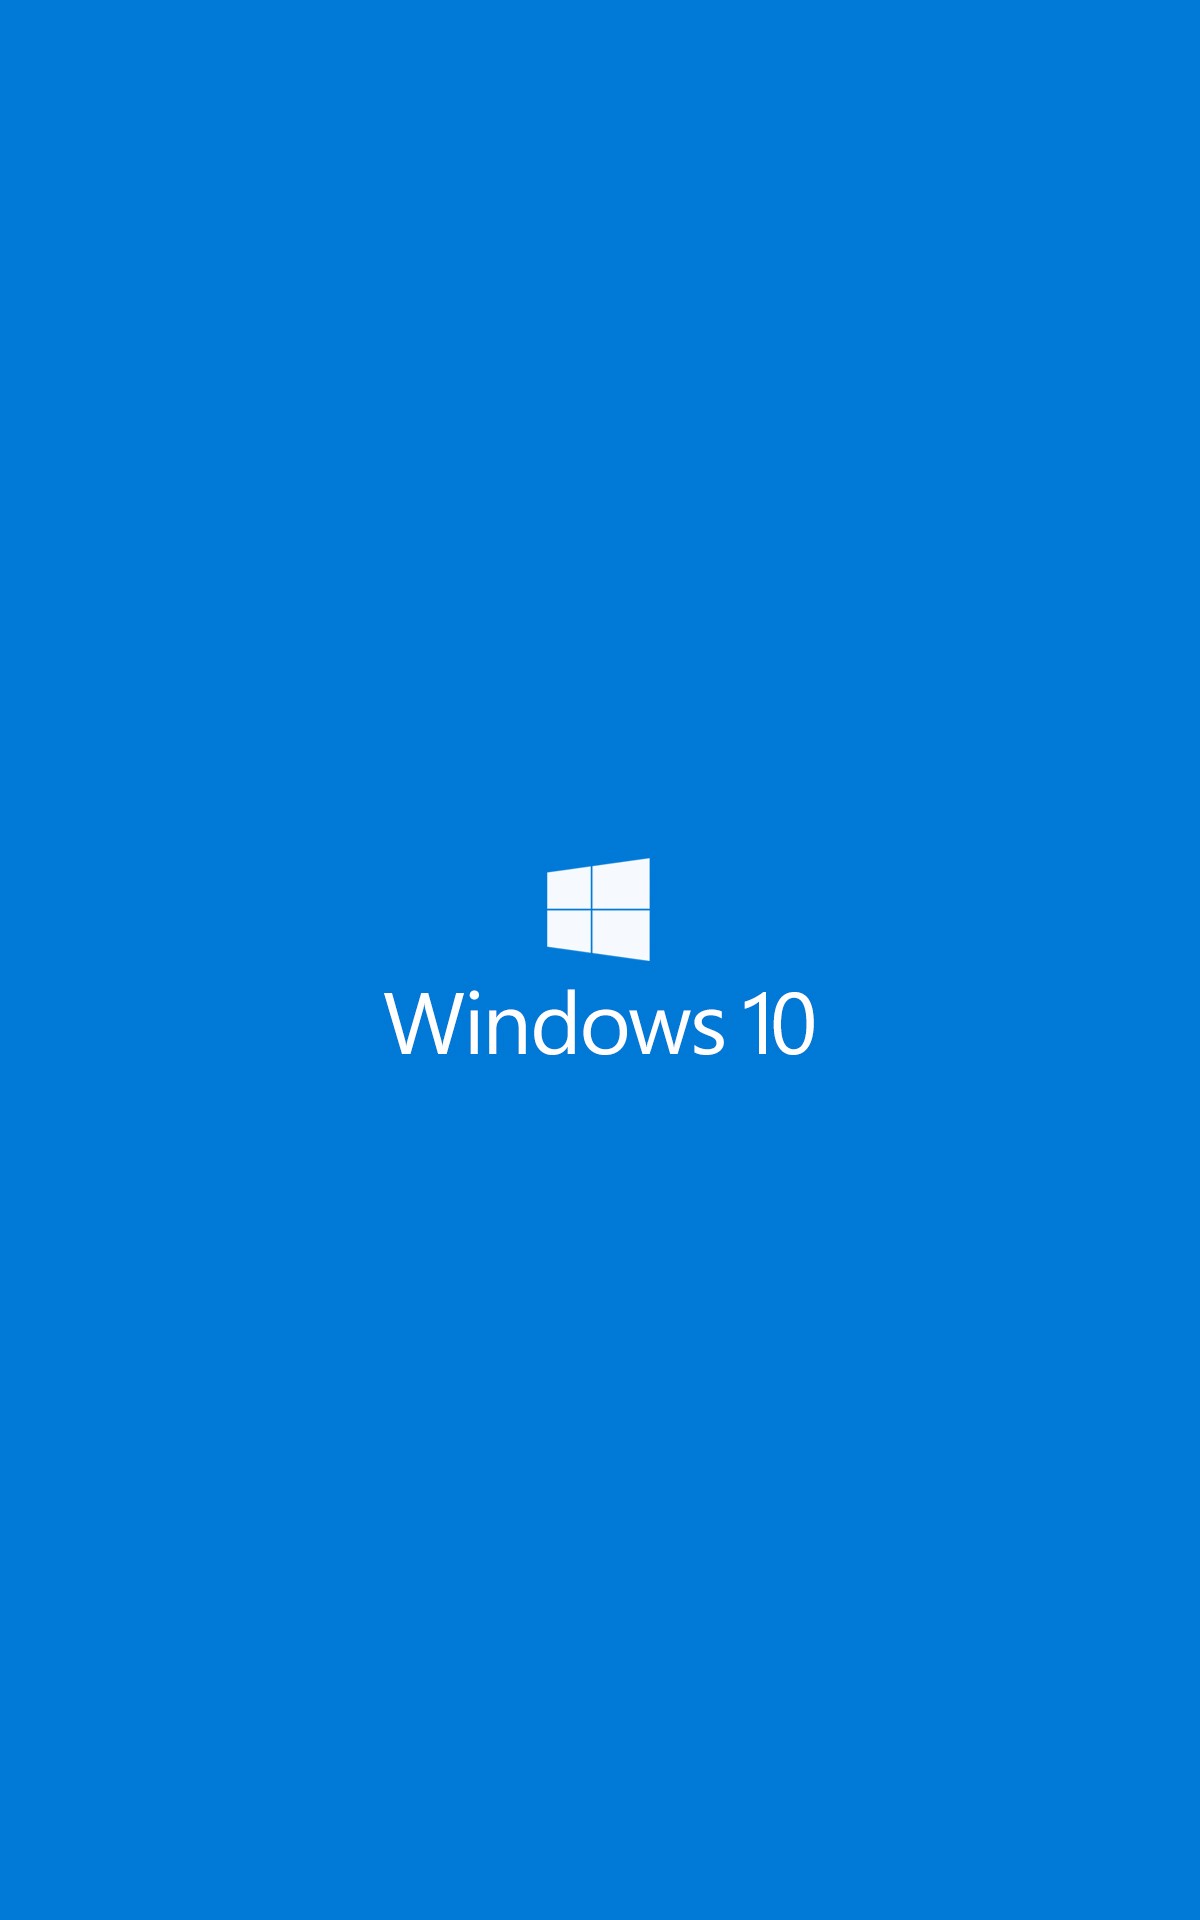 General 1200x1920 Windows 10 logo minimalism Microsoft Windows simple background blue background operating system